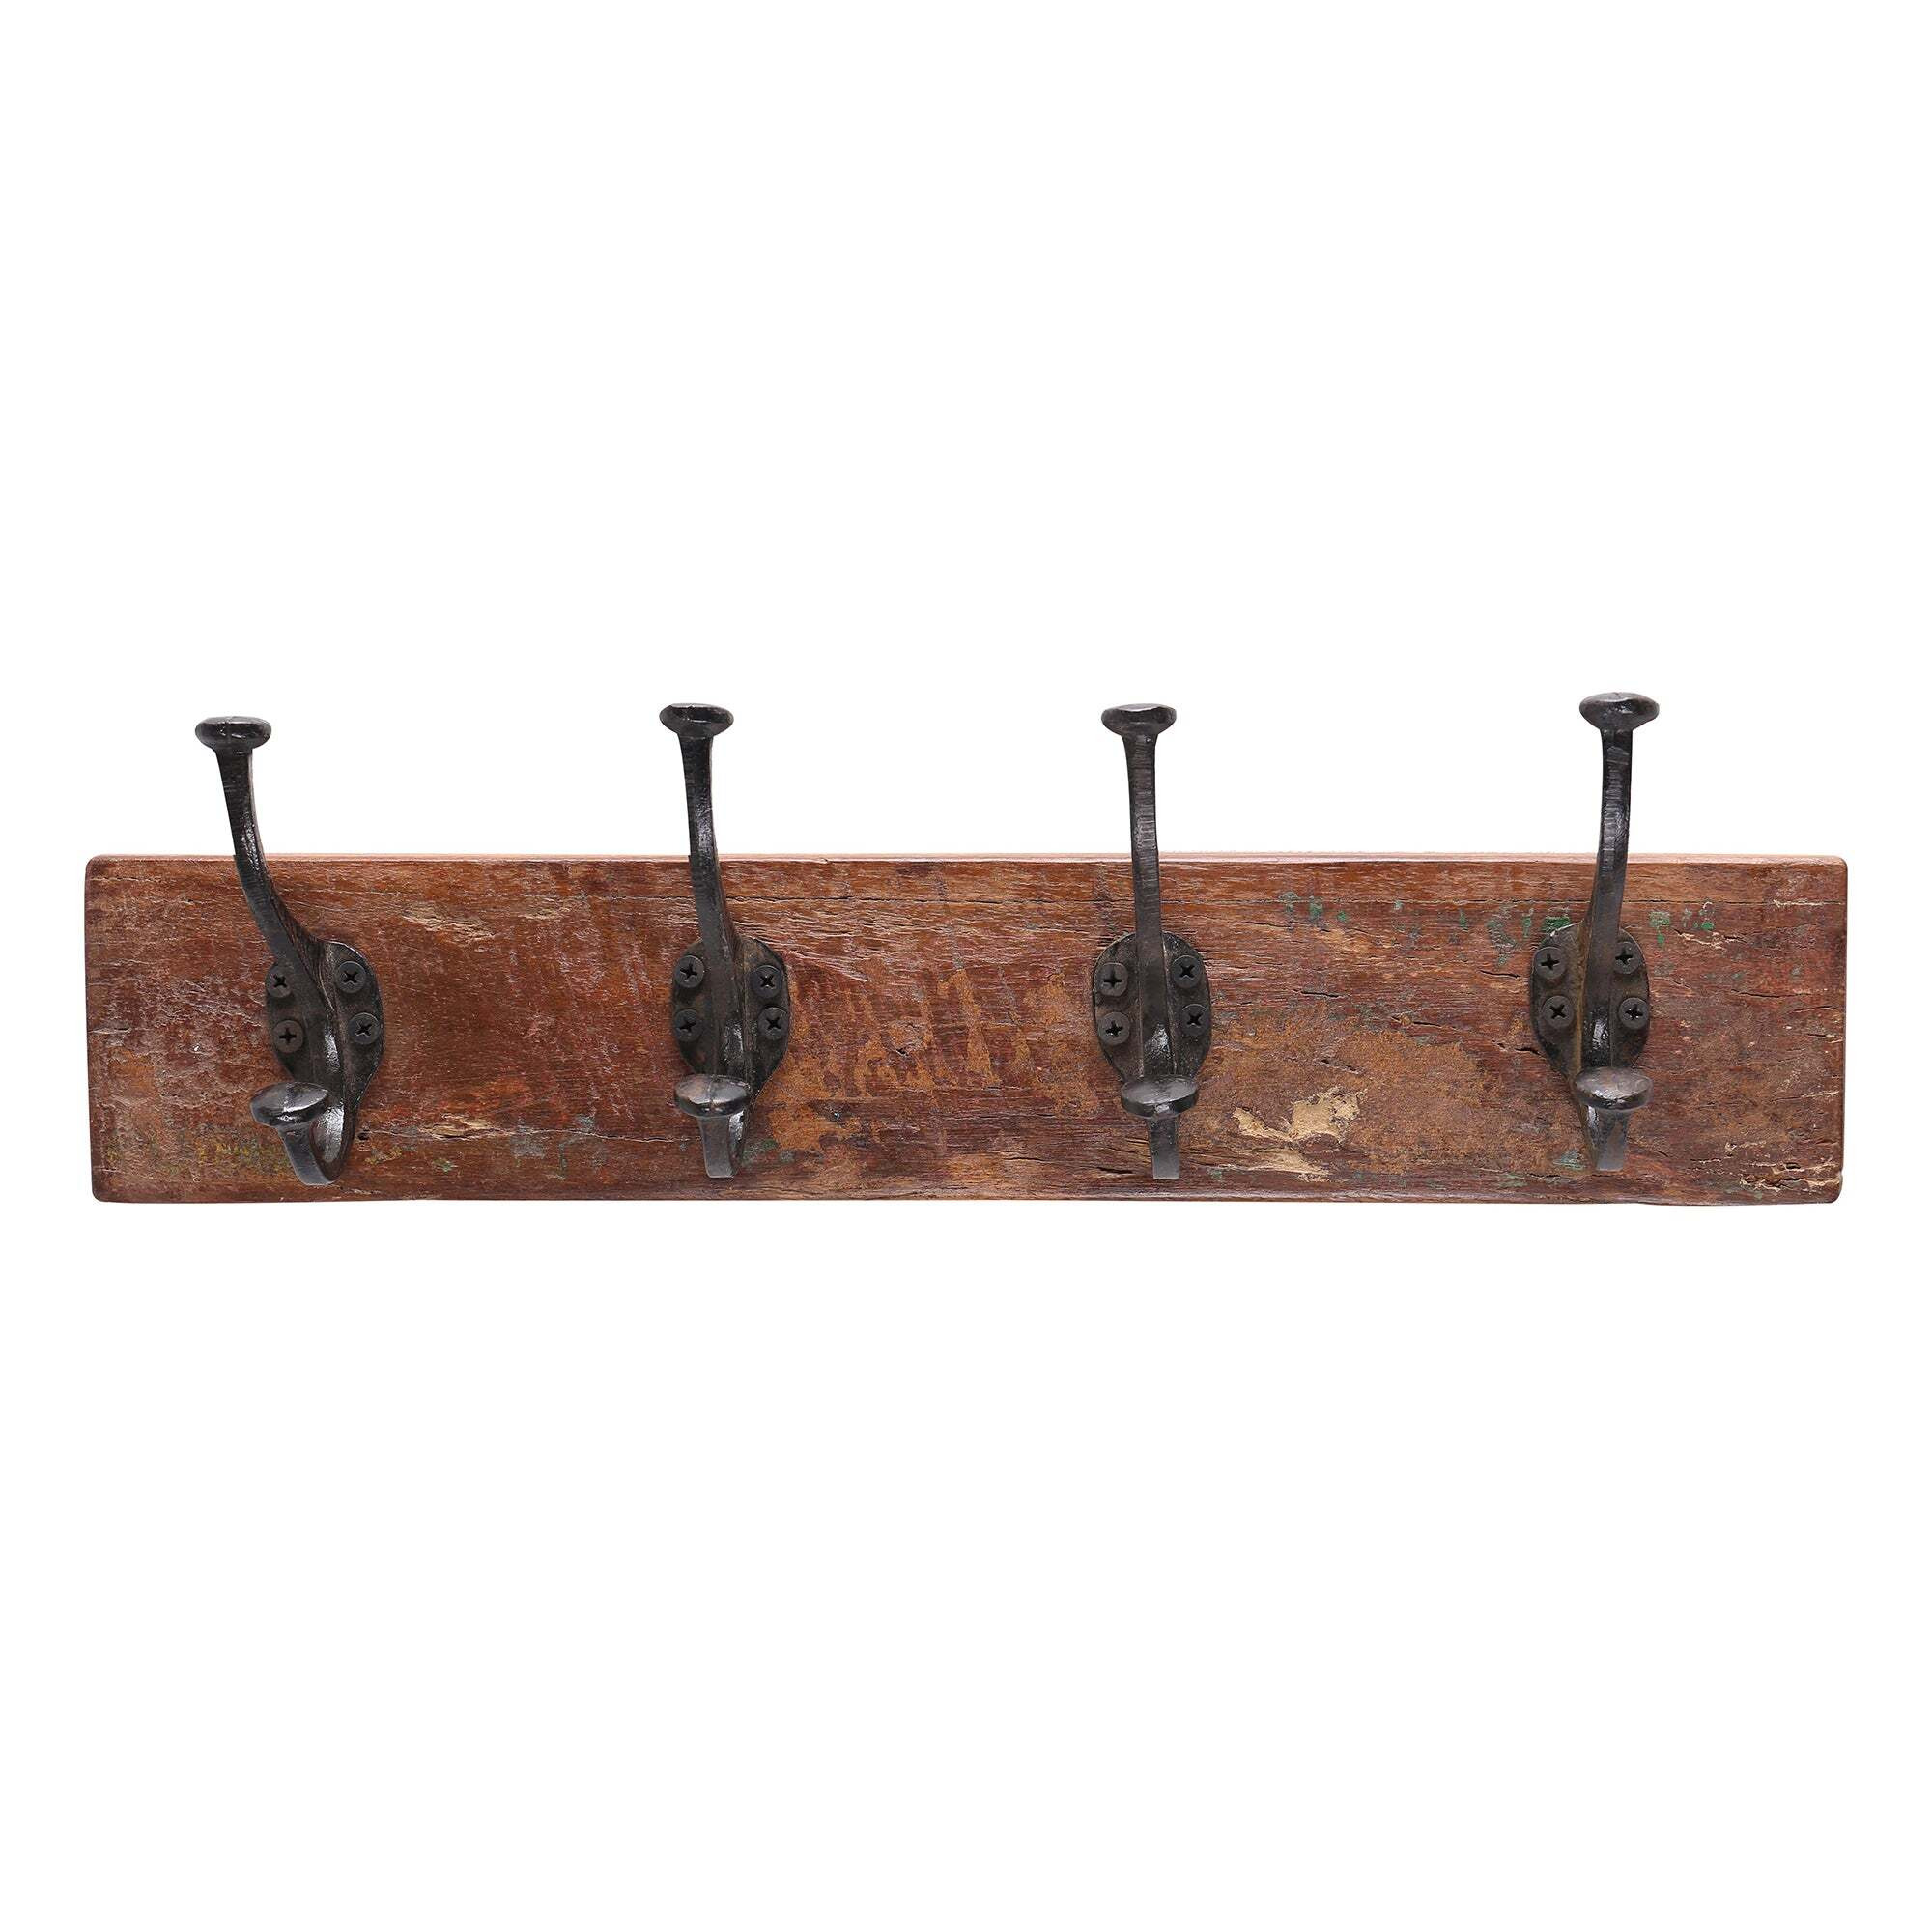 Reclaimed Wooden Coat Rack with 4 Iron Hooks - image 1